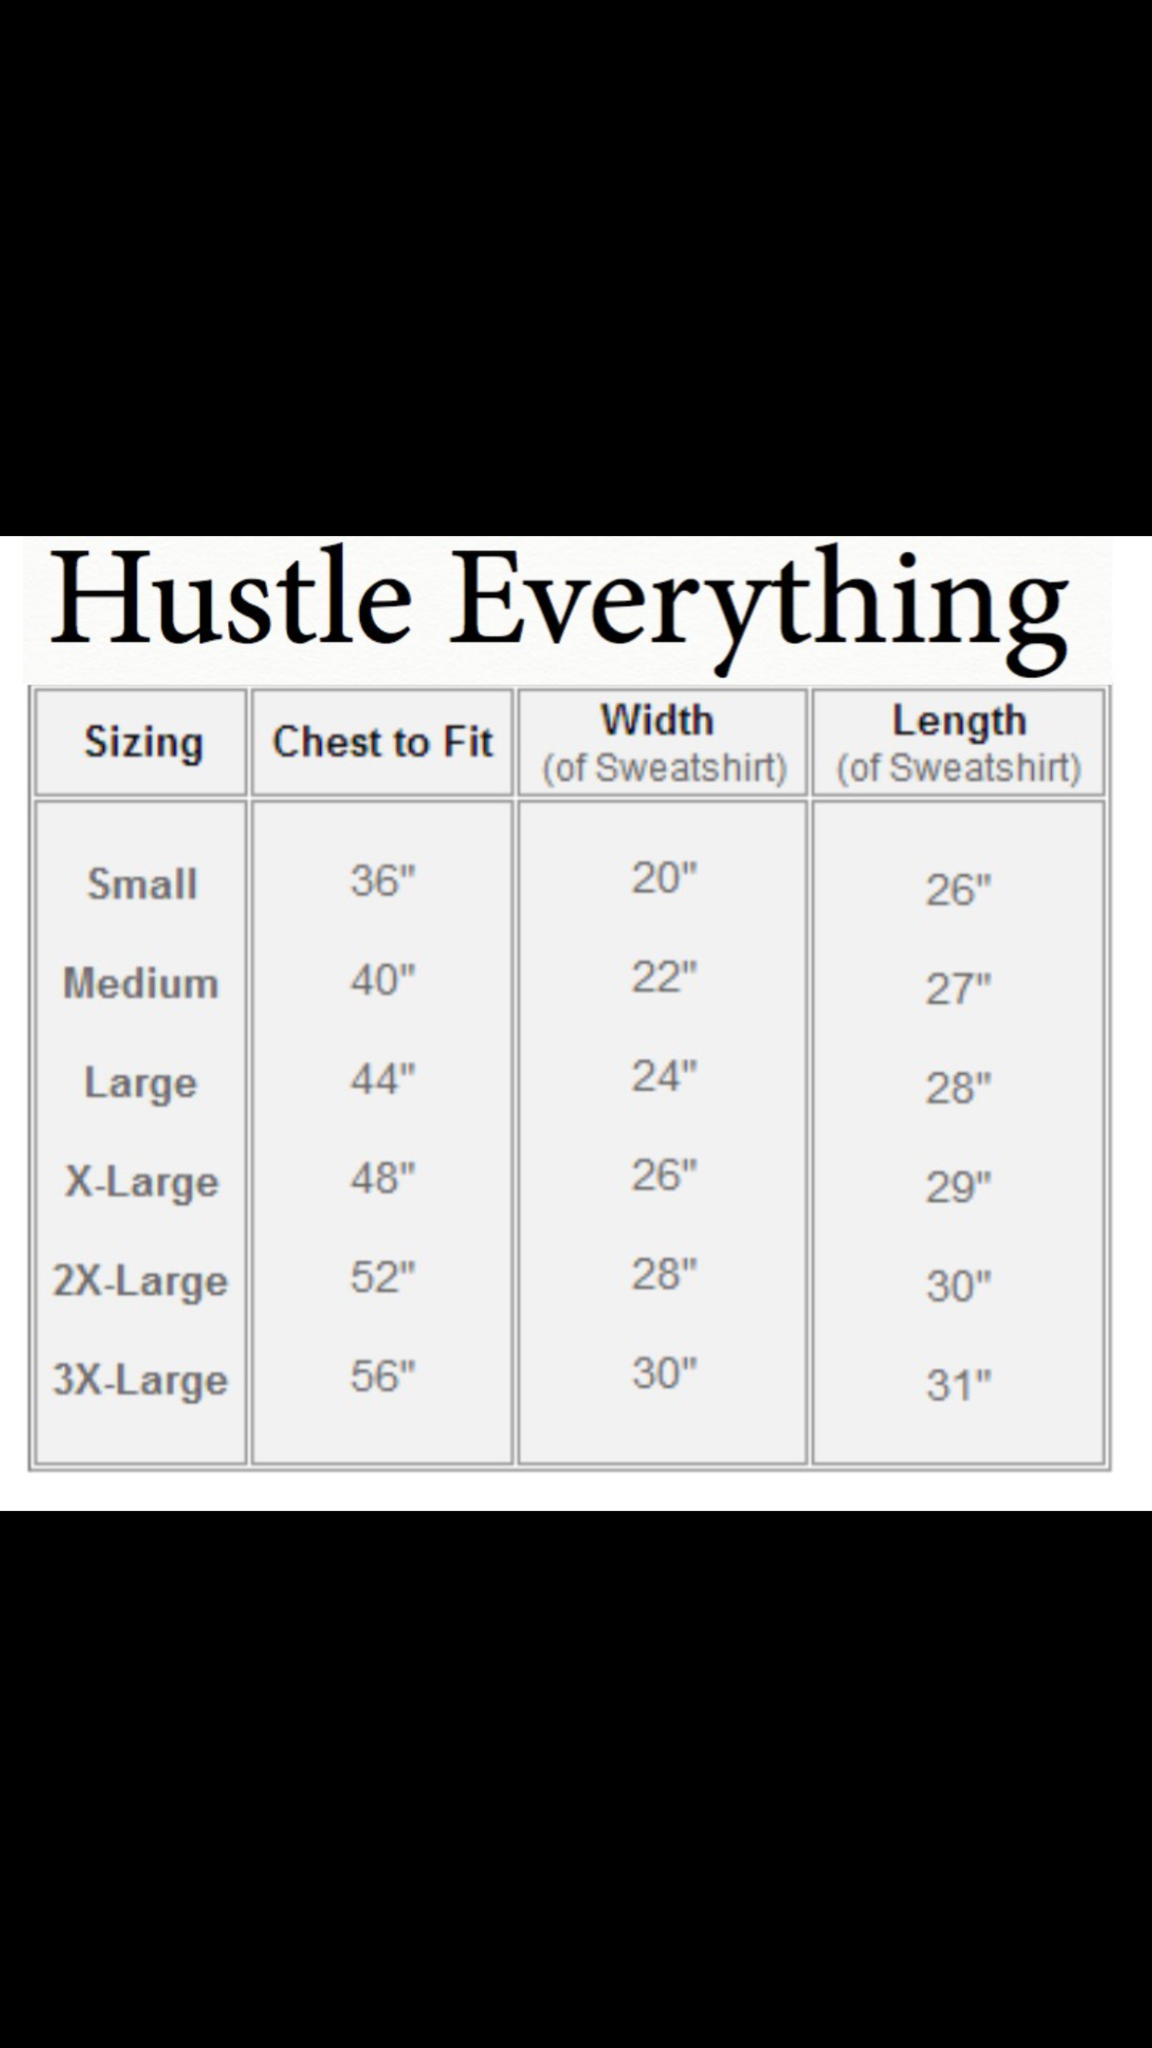 Sweater - Black Hustle State of Mind Crewneck - Hustle Everything